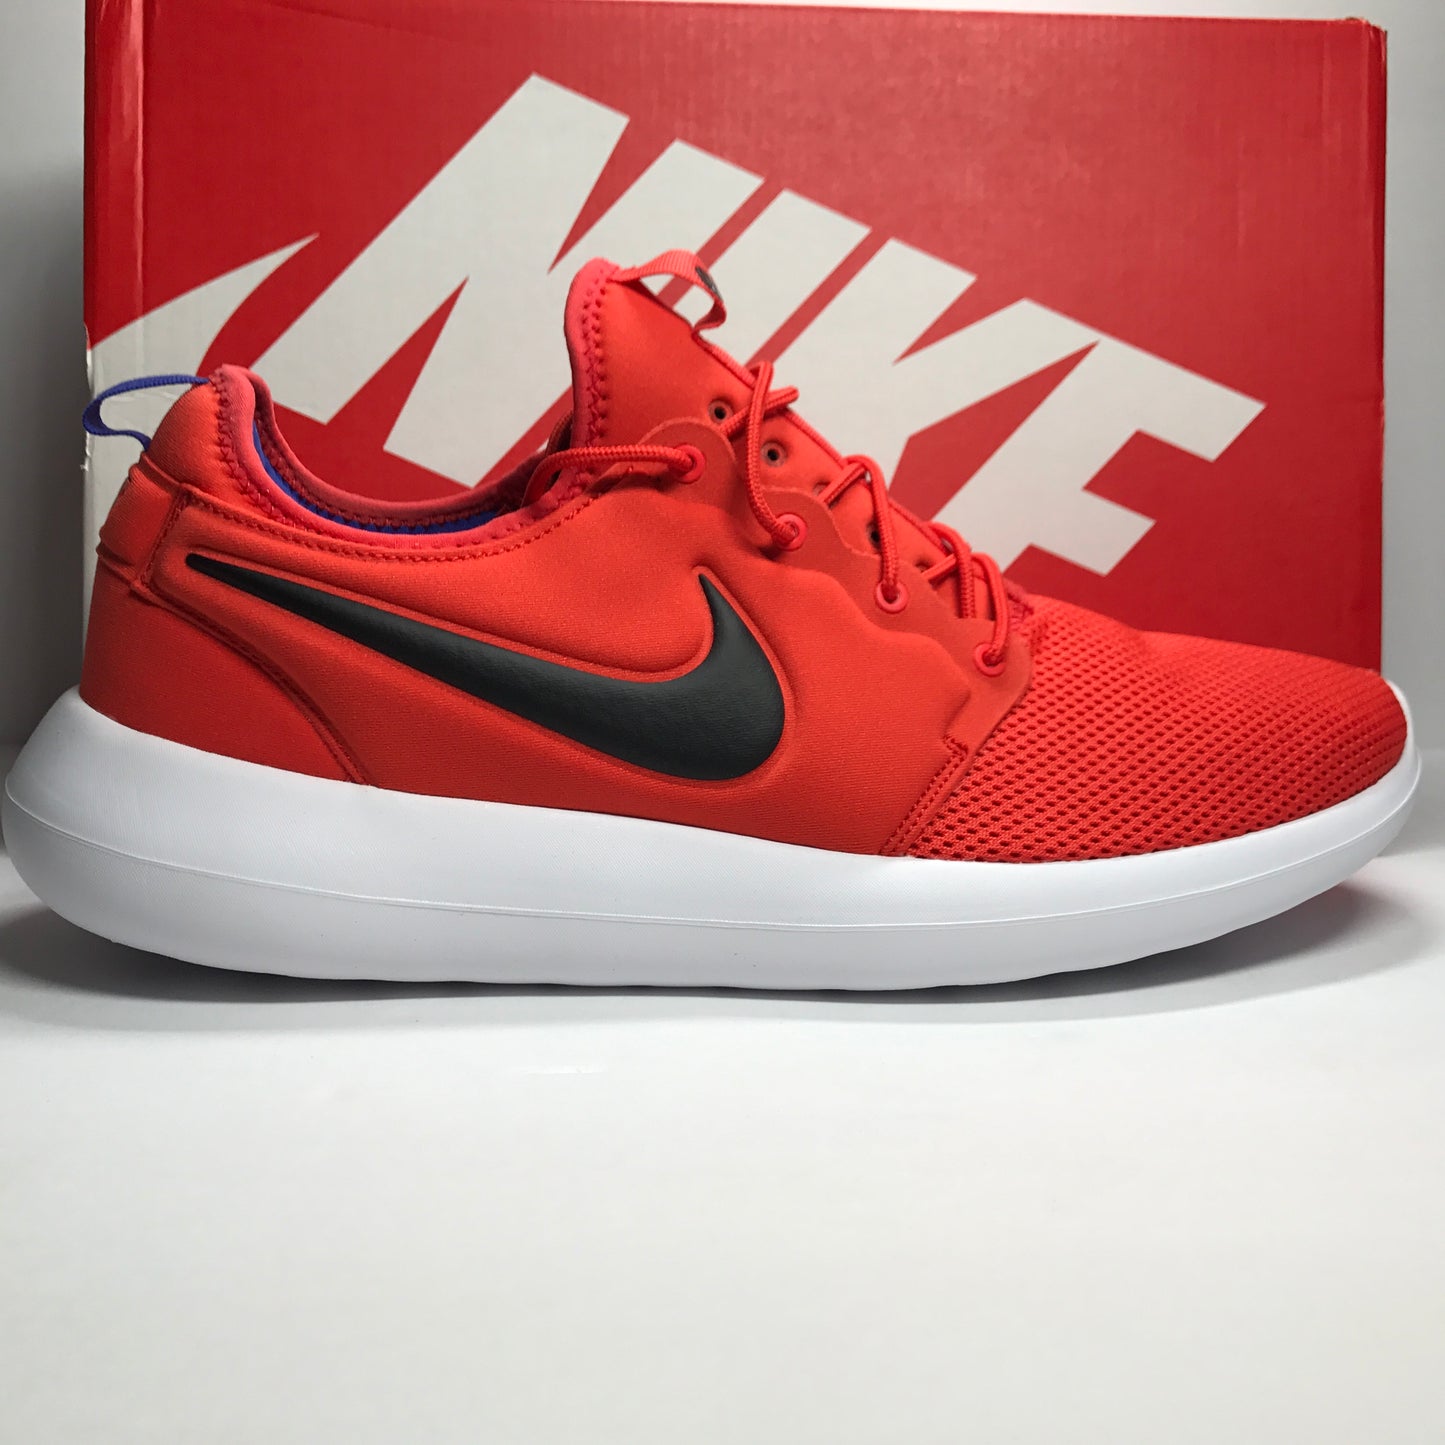 DS Nike Roshe Two Max Orange Size 15